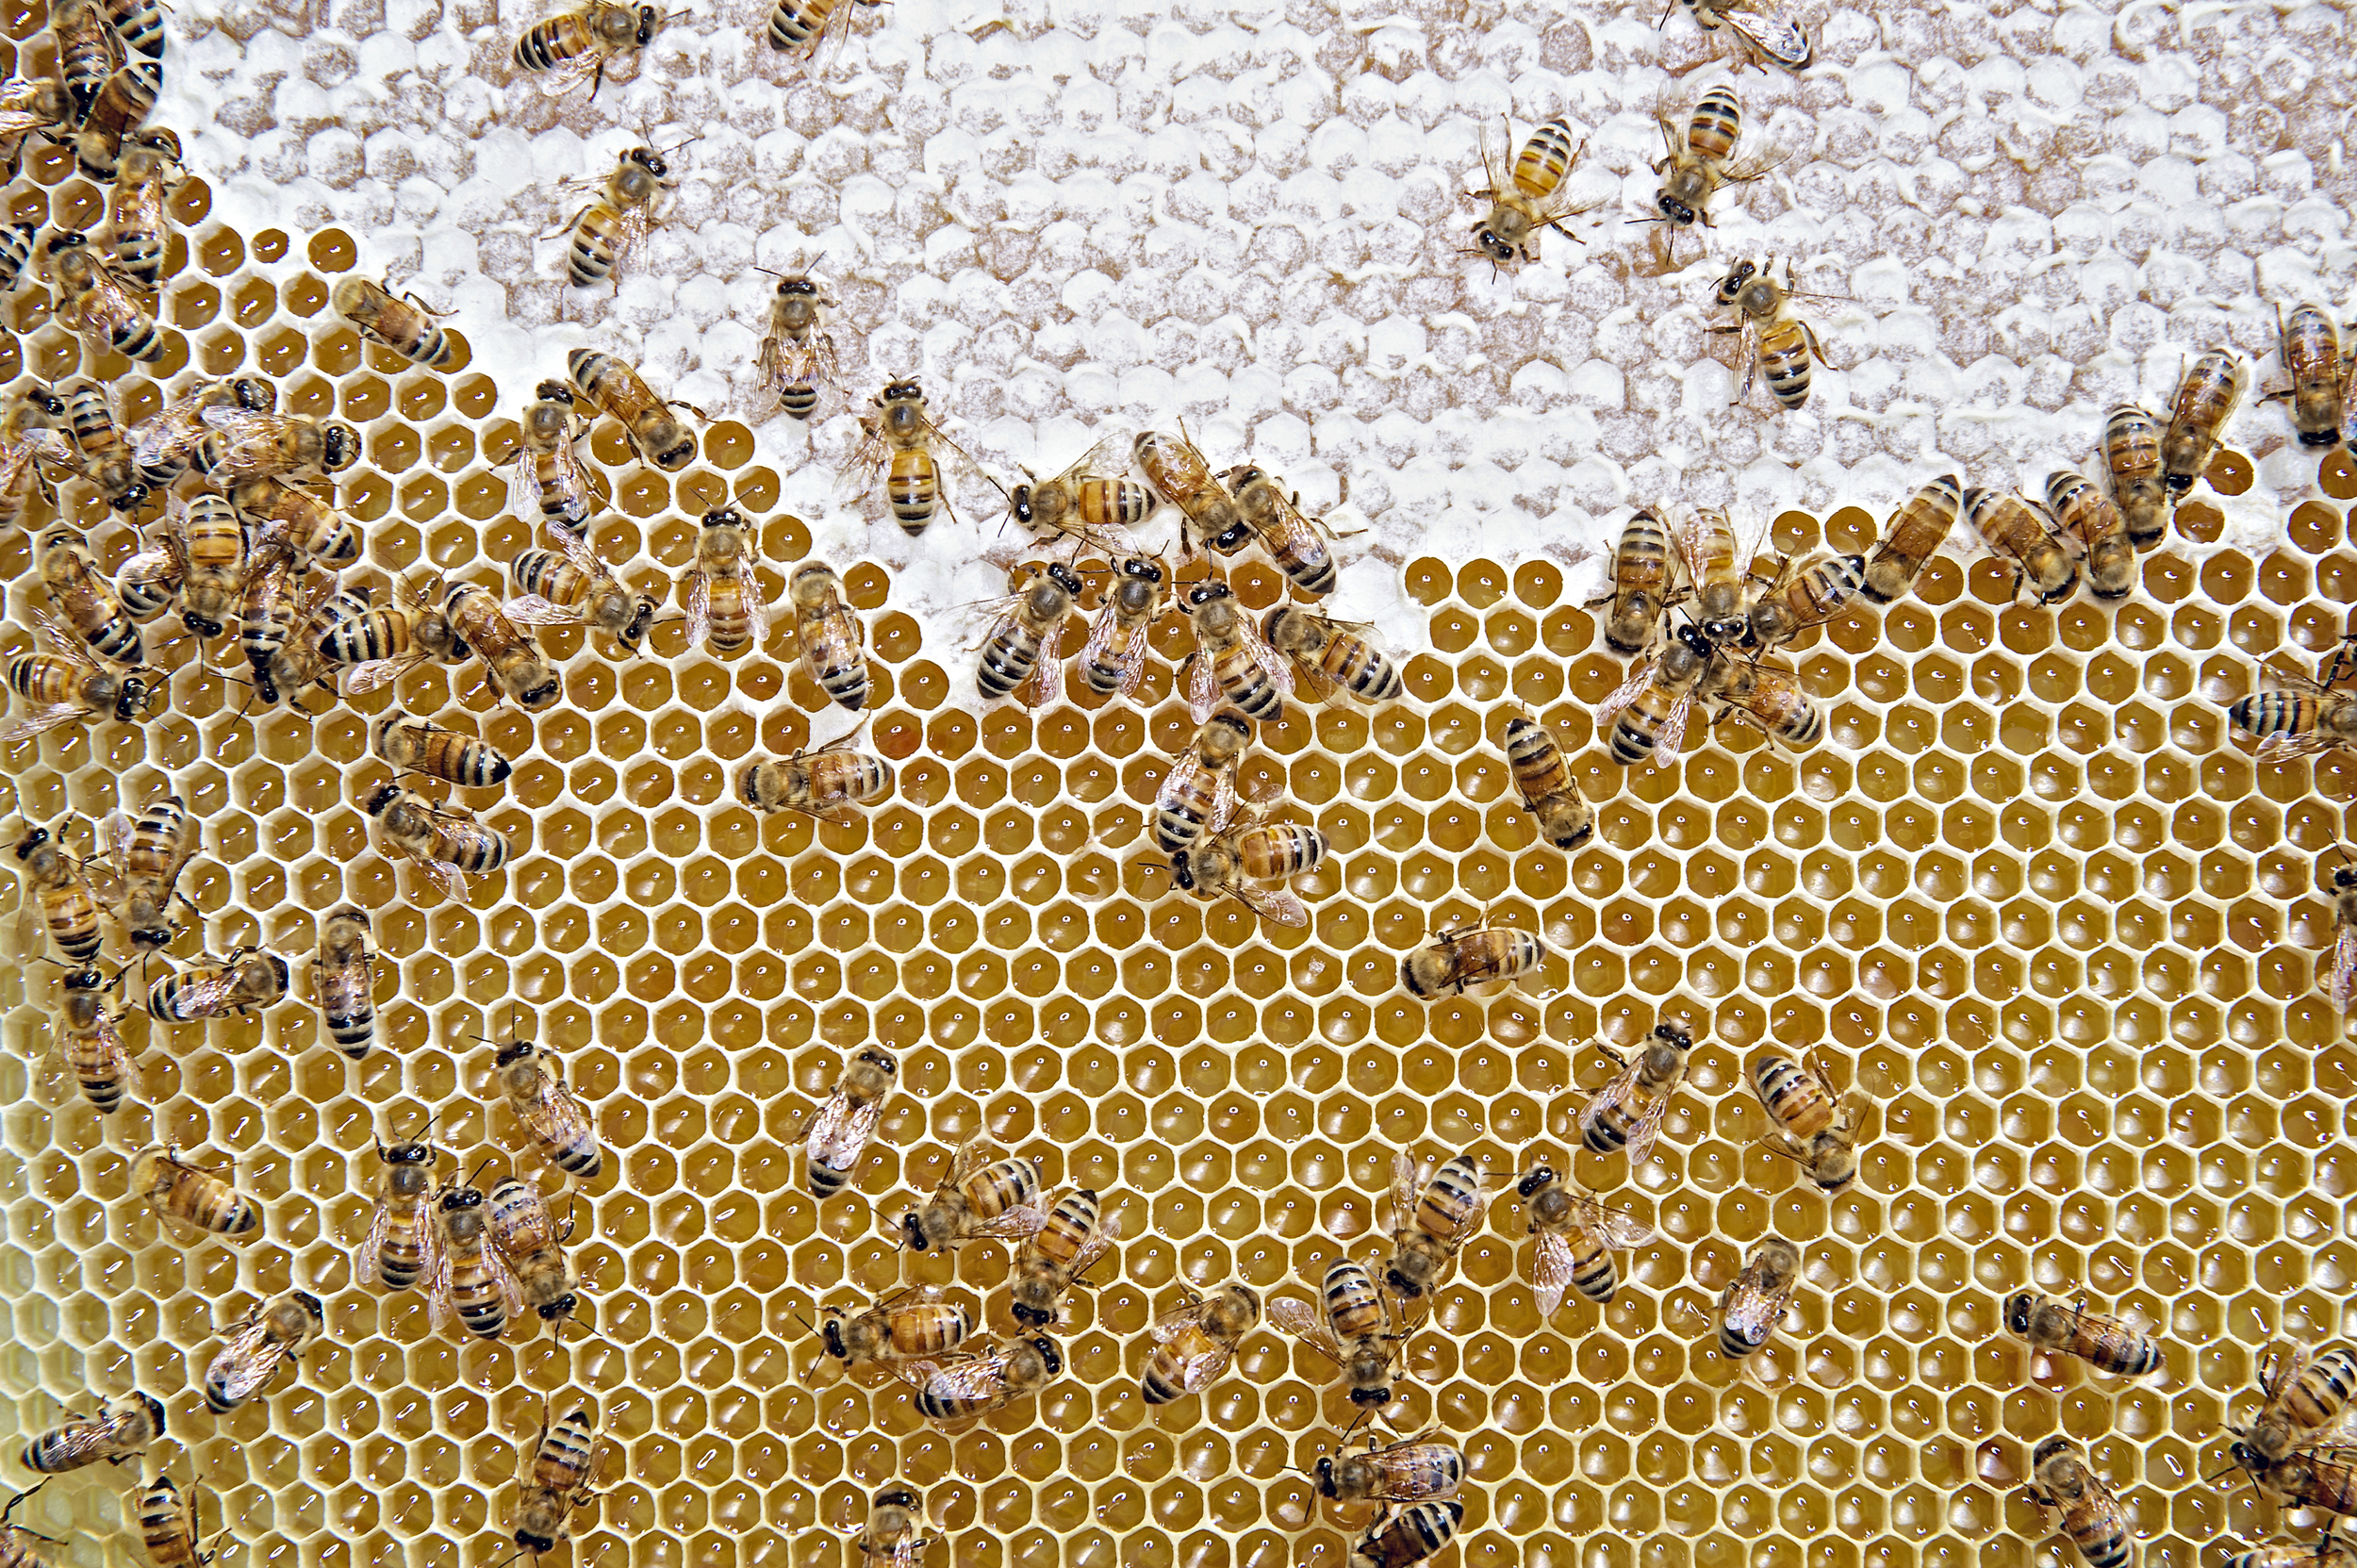 Bees1WEB.jpg